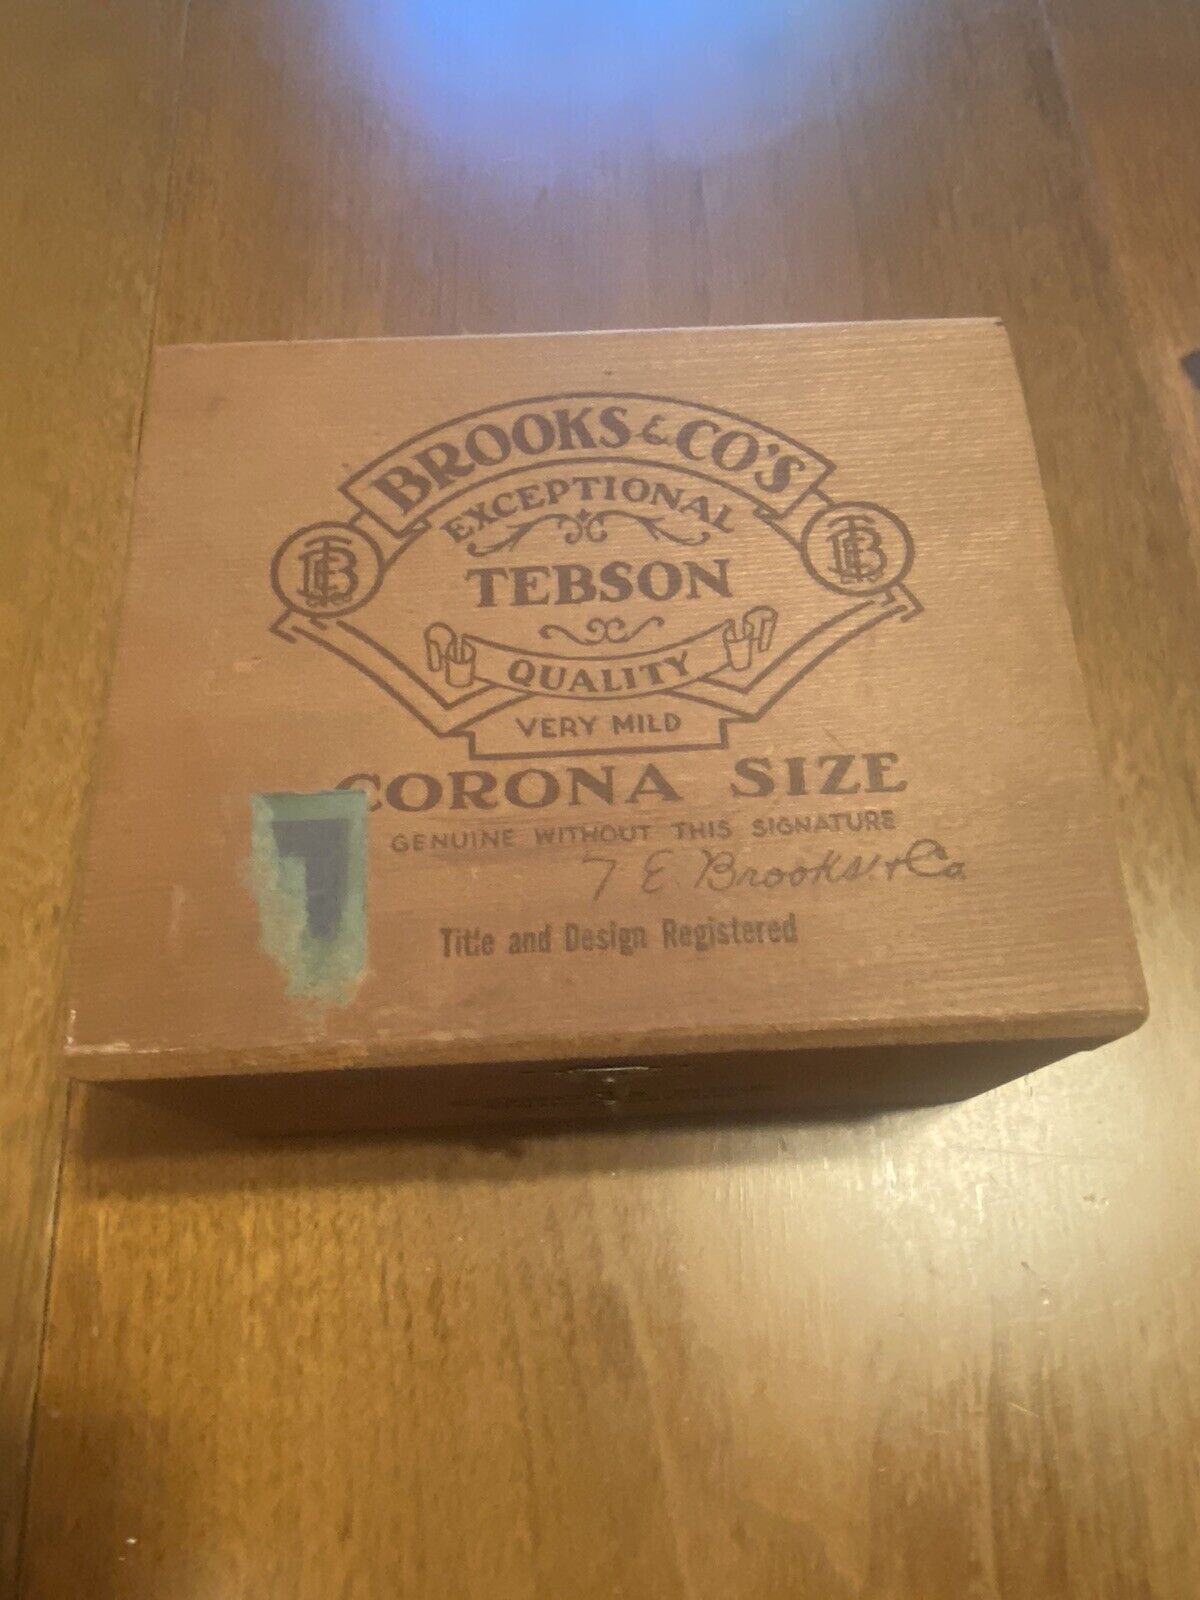 Vtg Brooks & CO’s Tebson Corona Size Wood Cigar Box